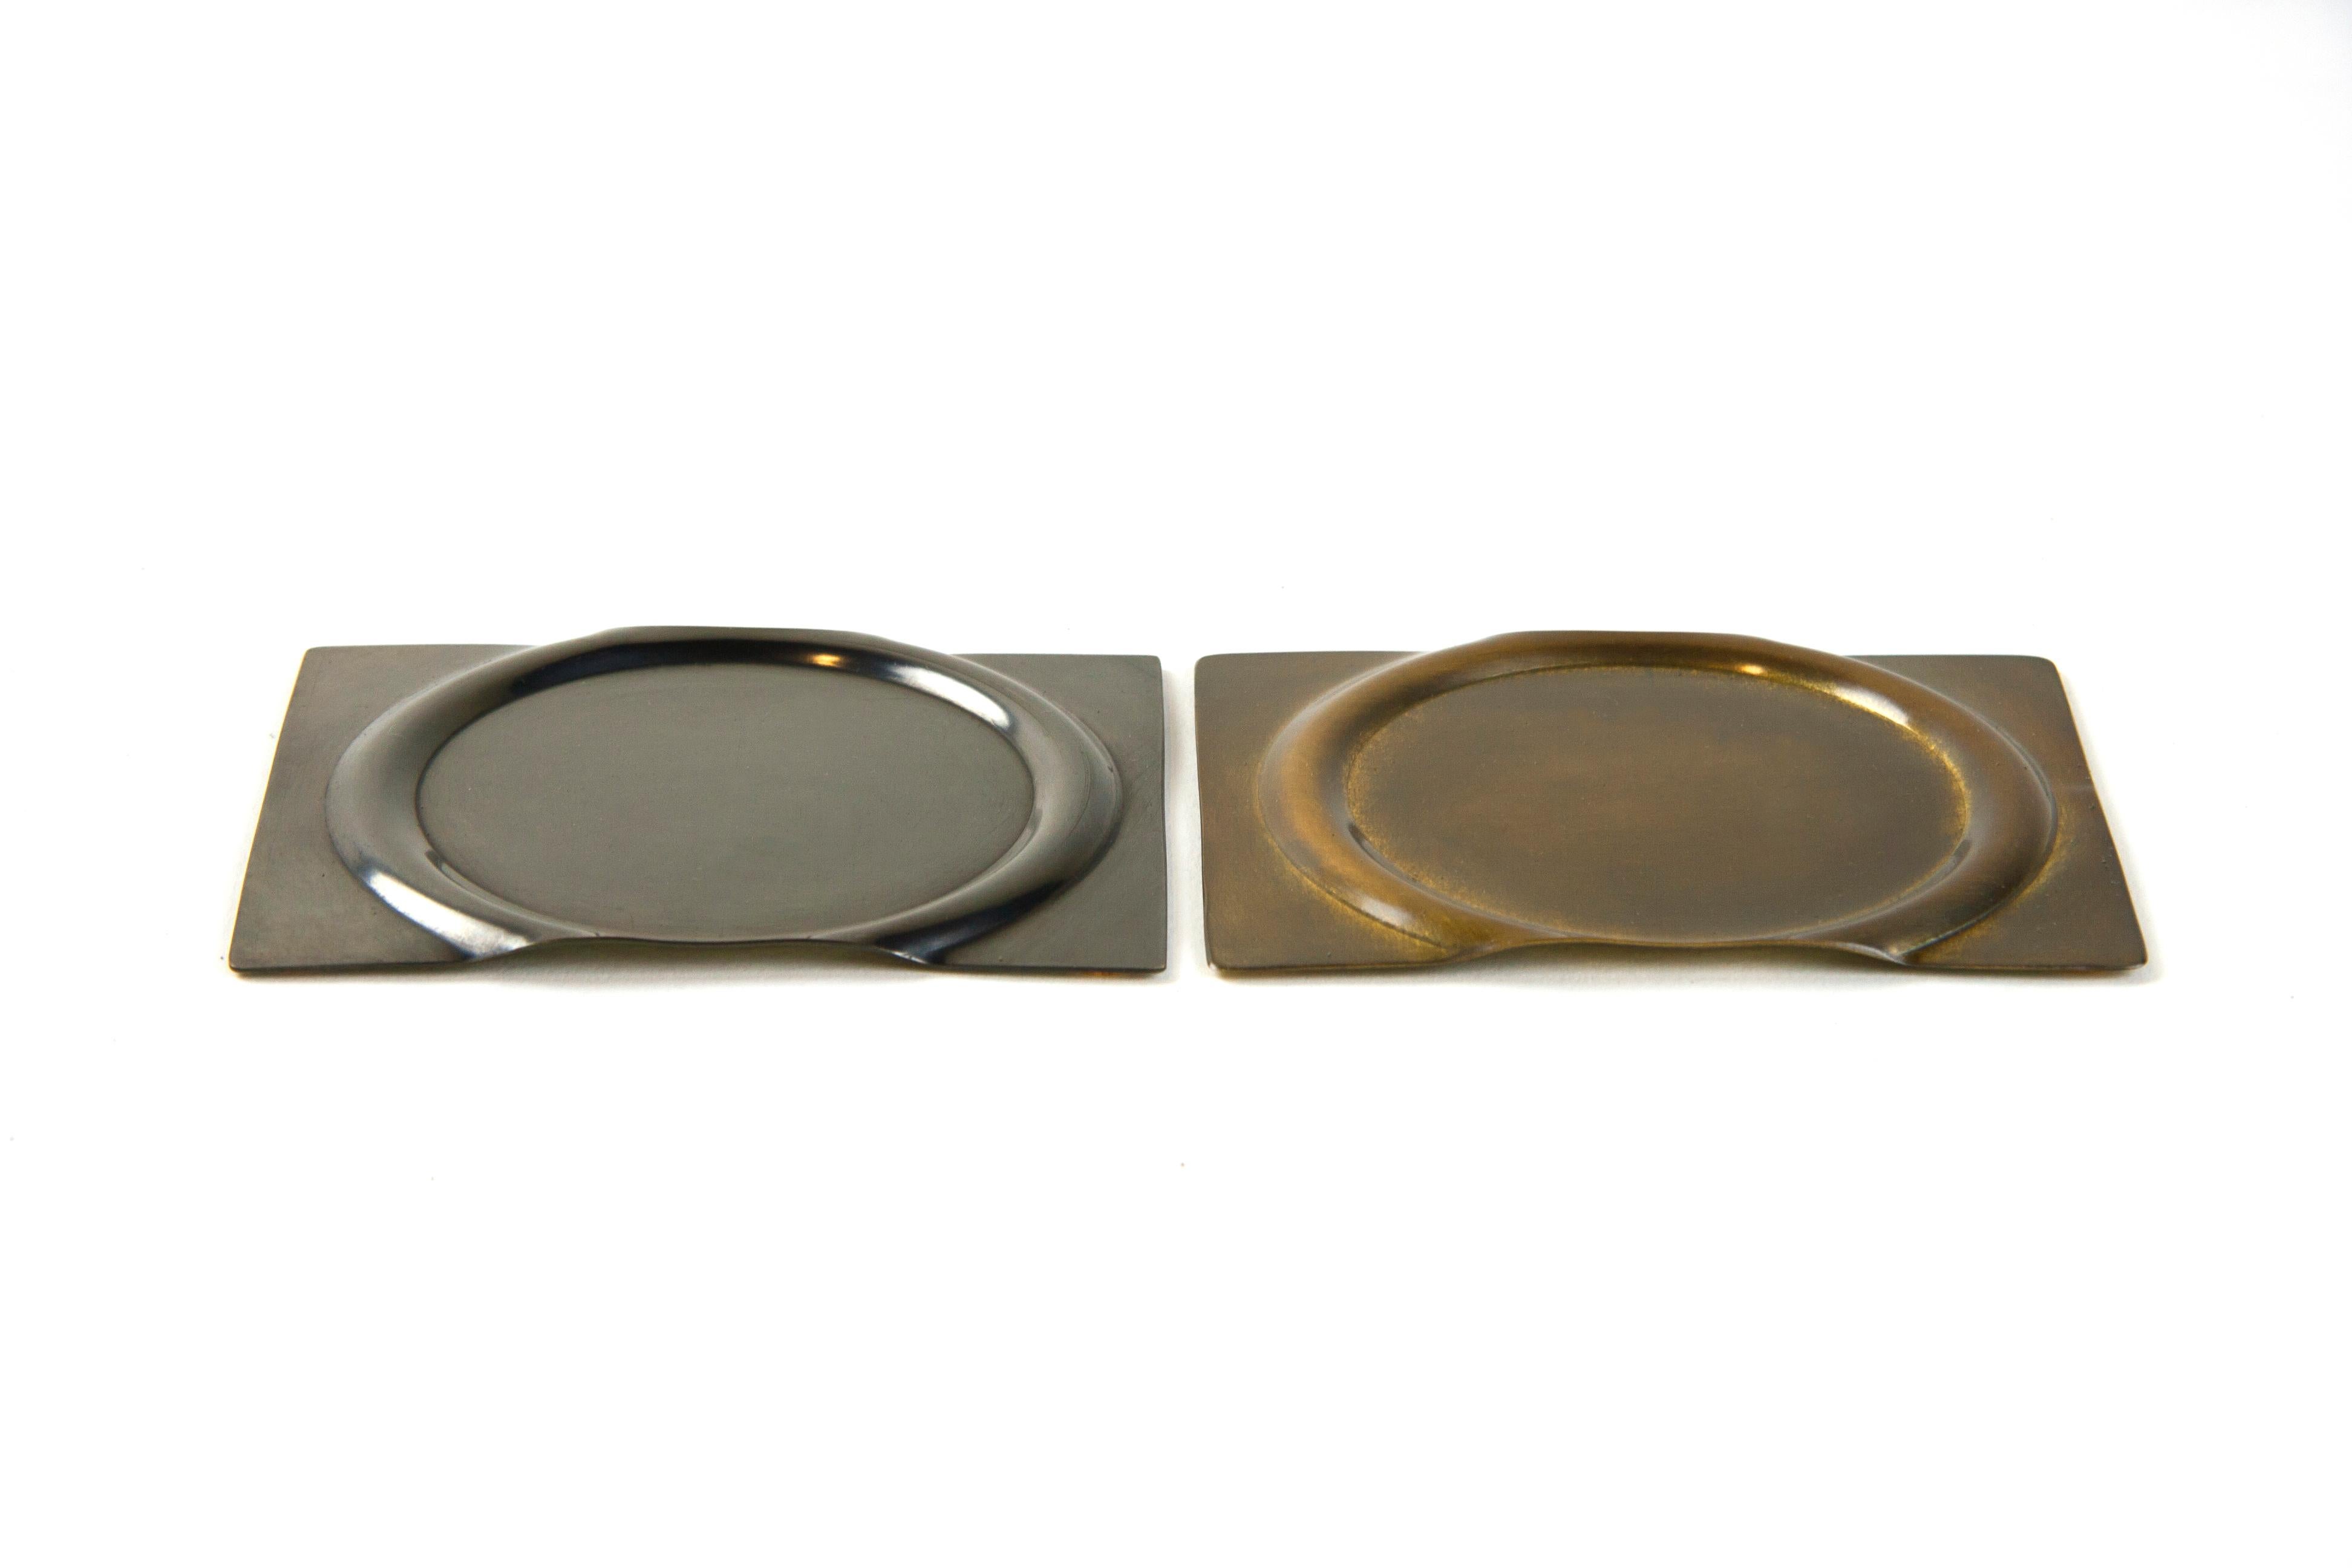 American Set of 4 Darkened Brass Coasters by Gentner Design